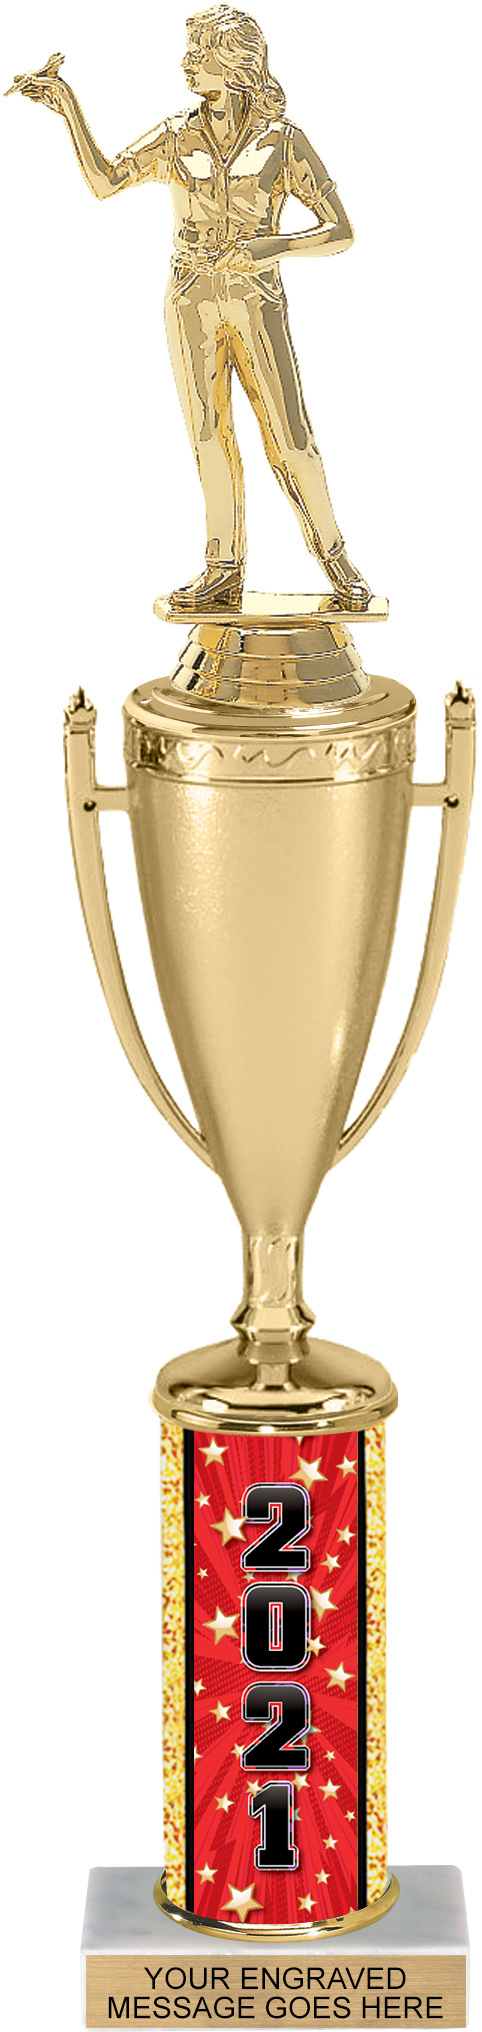 Comic Stars Year Column Cup Trophy - 15 inch